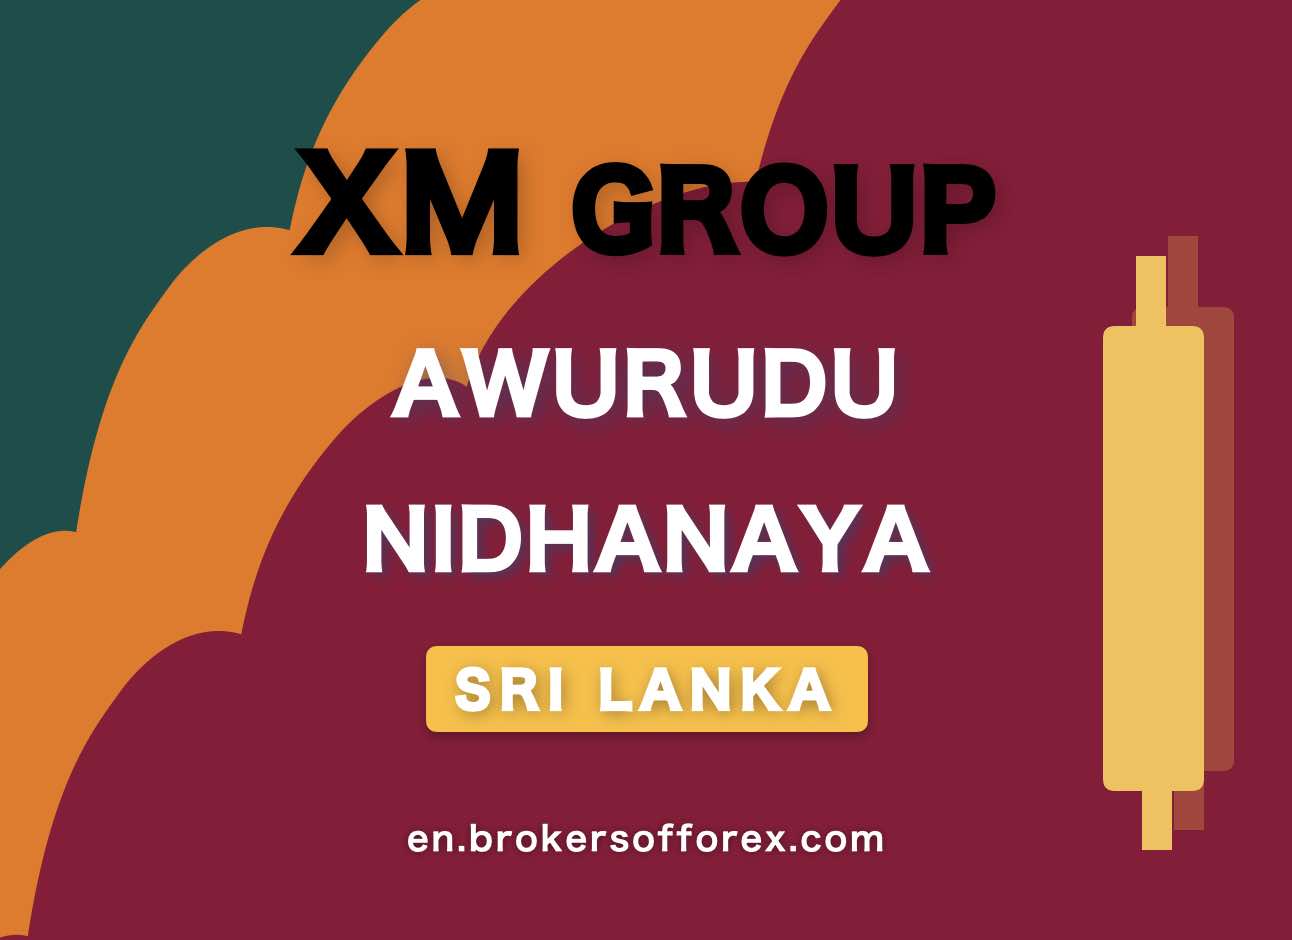 XM Group Awurudu Nidhanaya